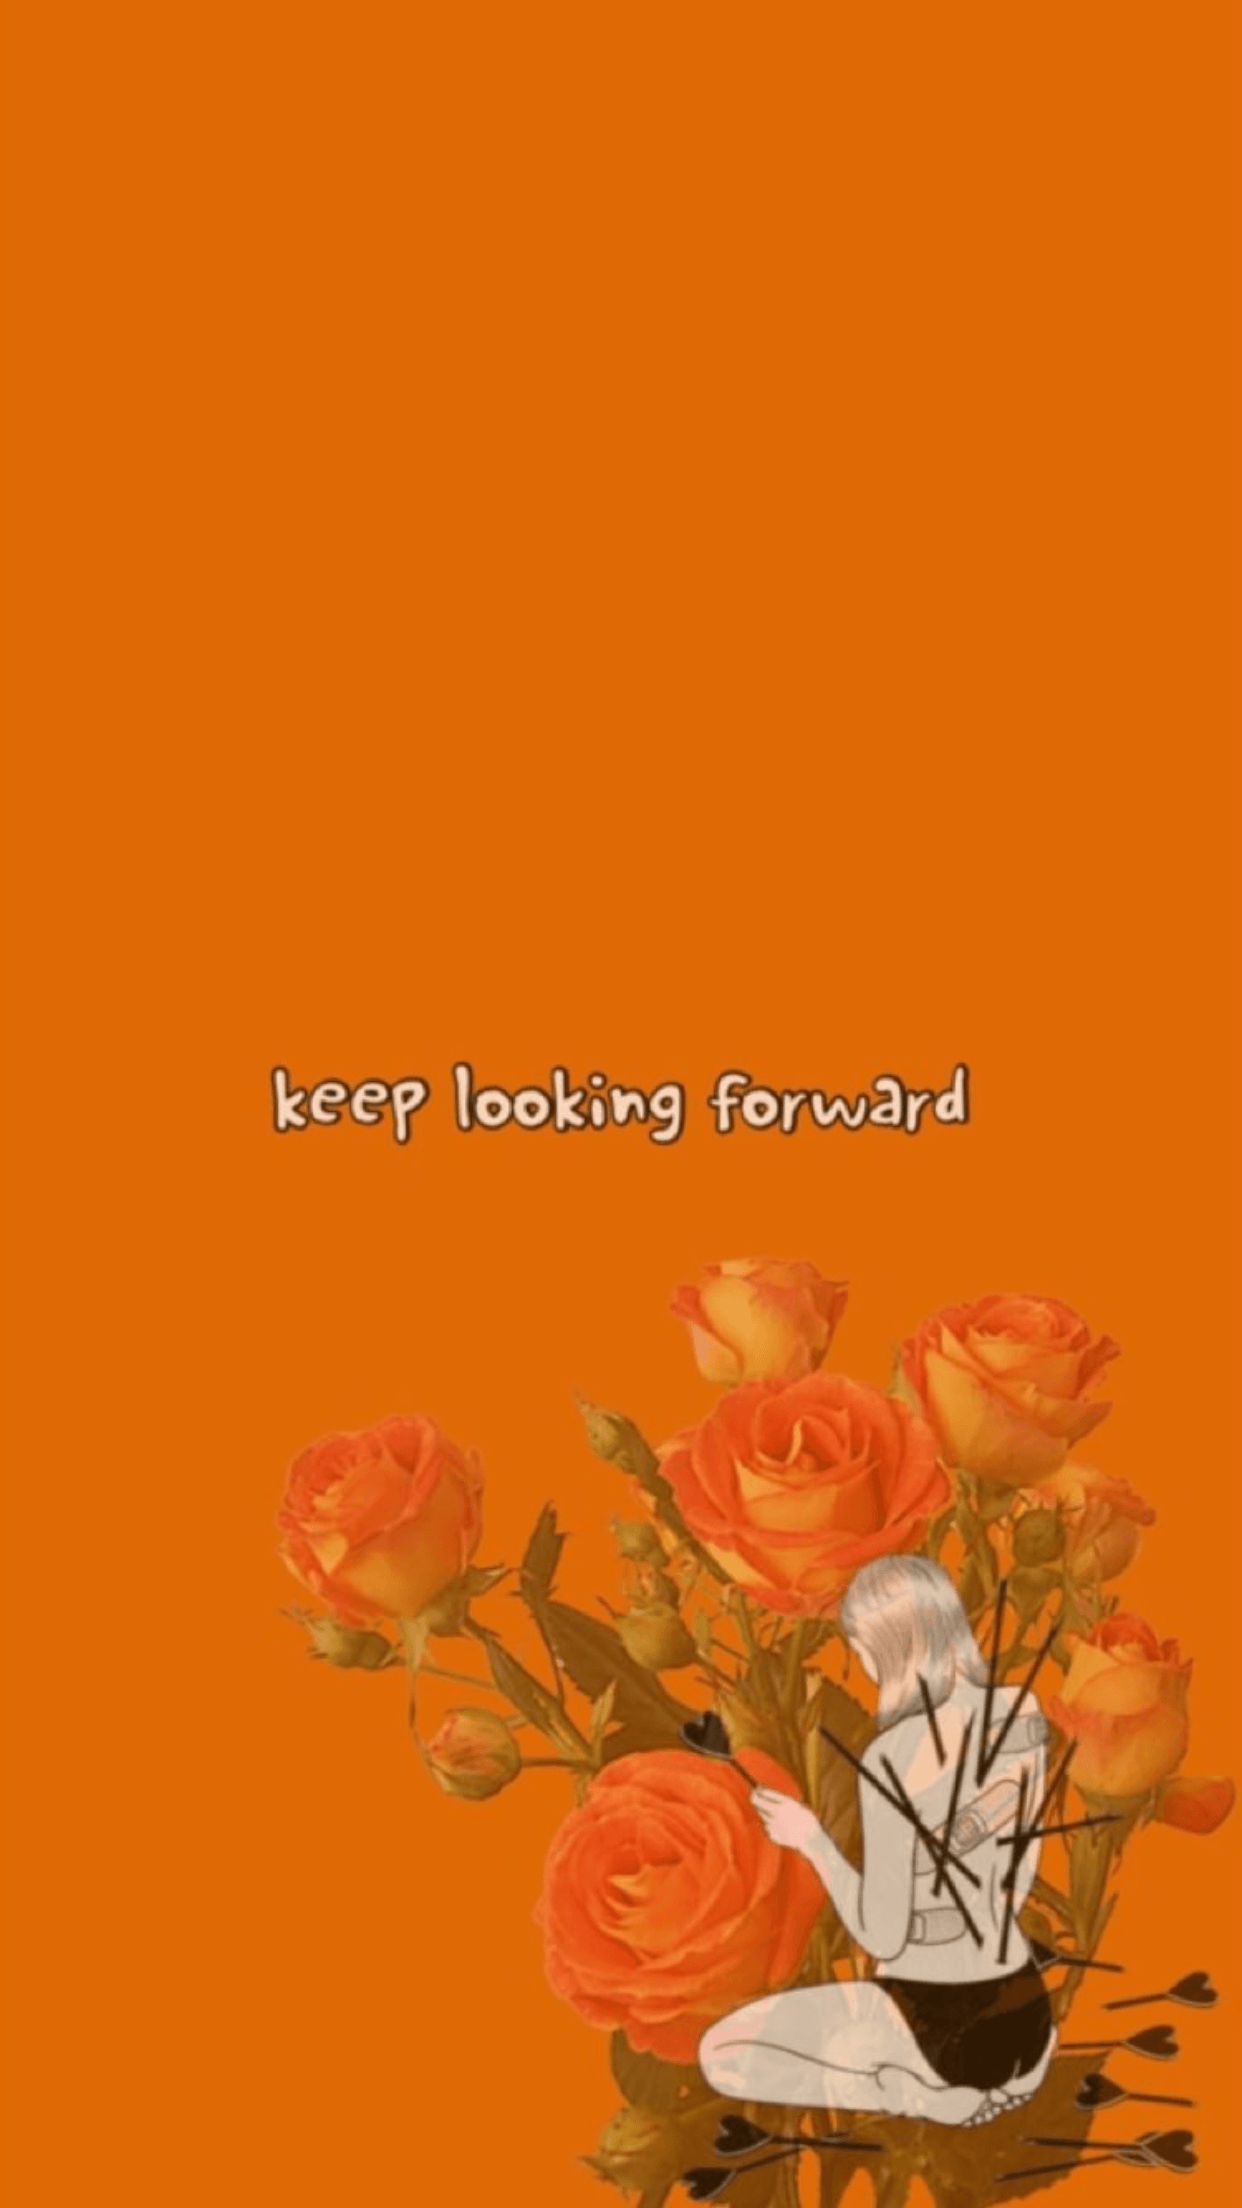 Keep looking forward, an orange background with a girl sitting on the ground and roses around her - Pastel orange, orange, neon orange